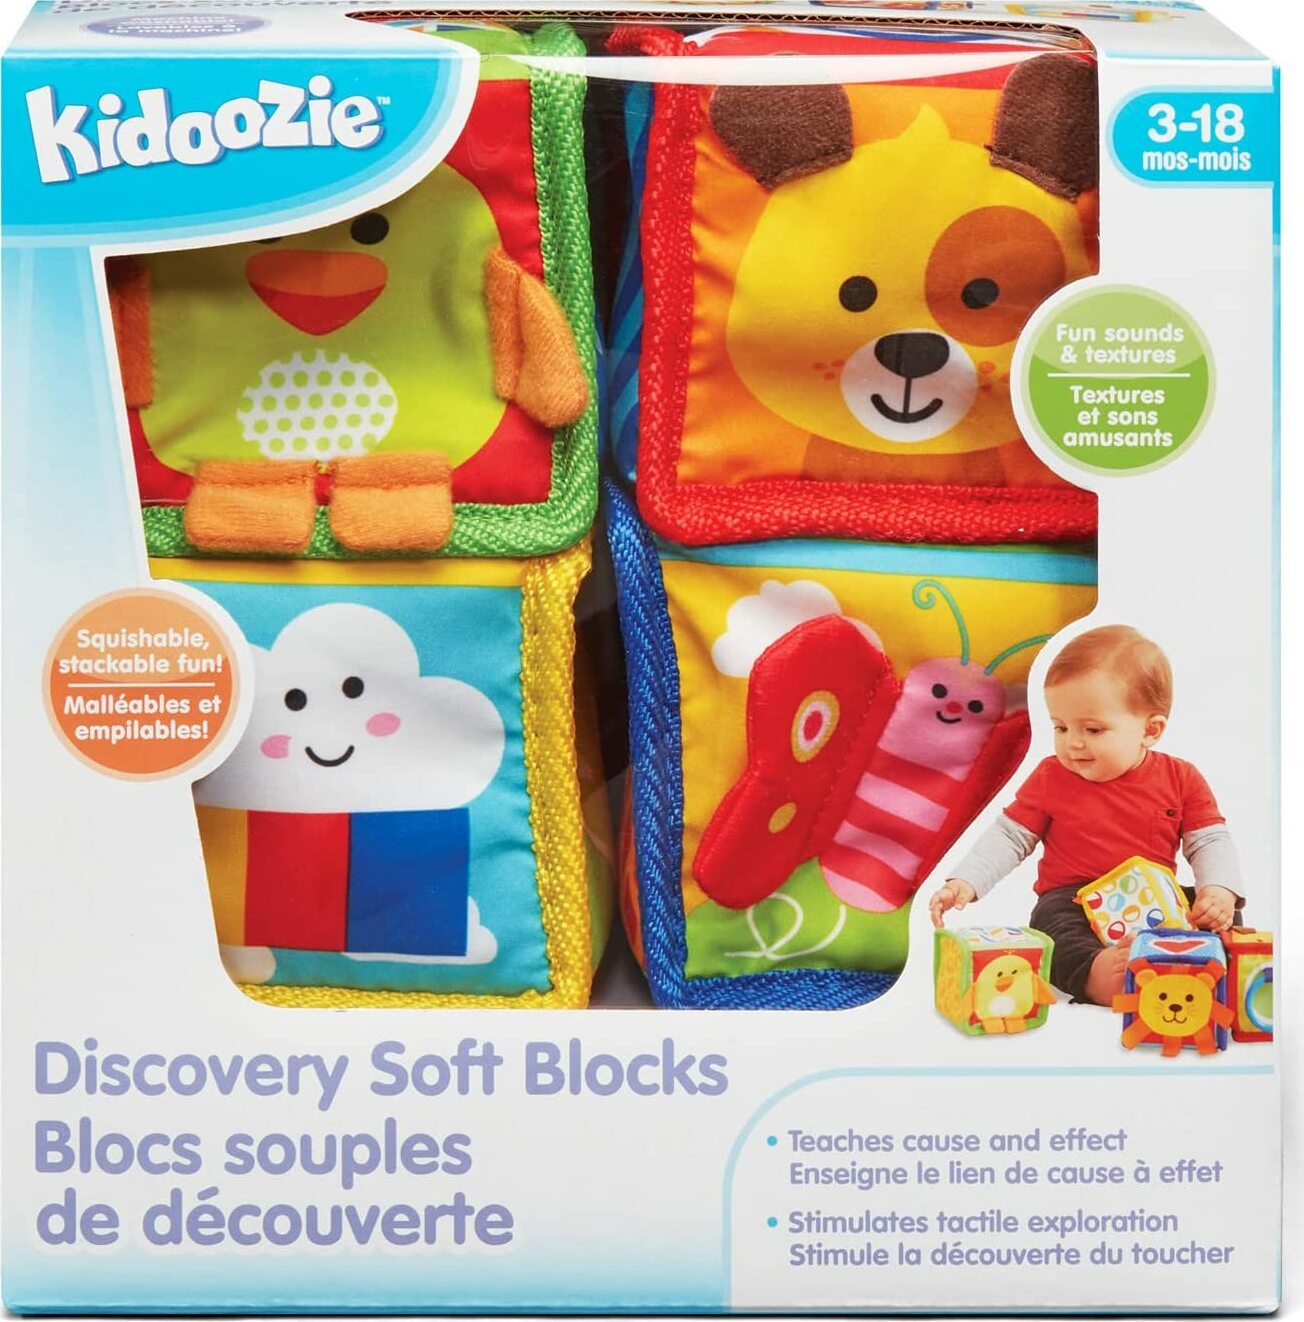 Discovery Soft Blocks